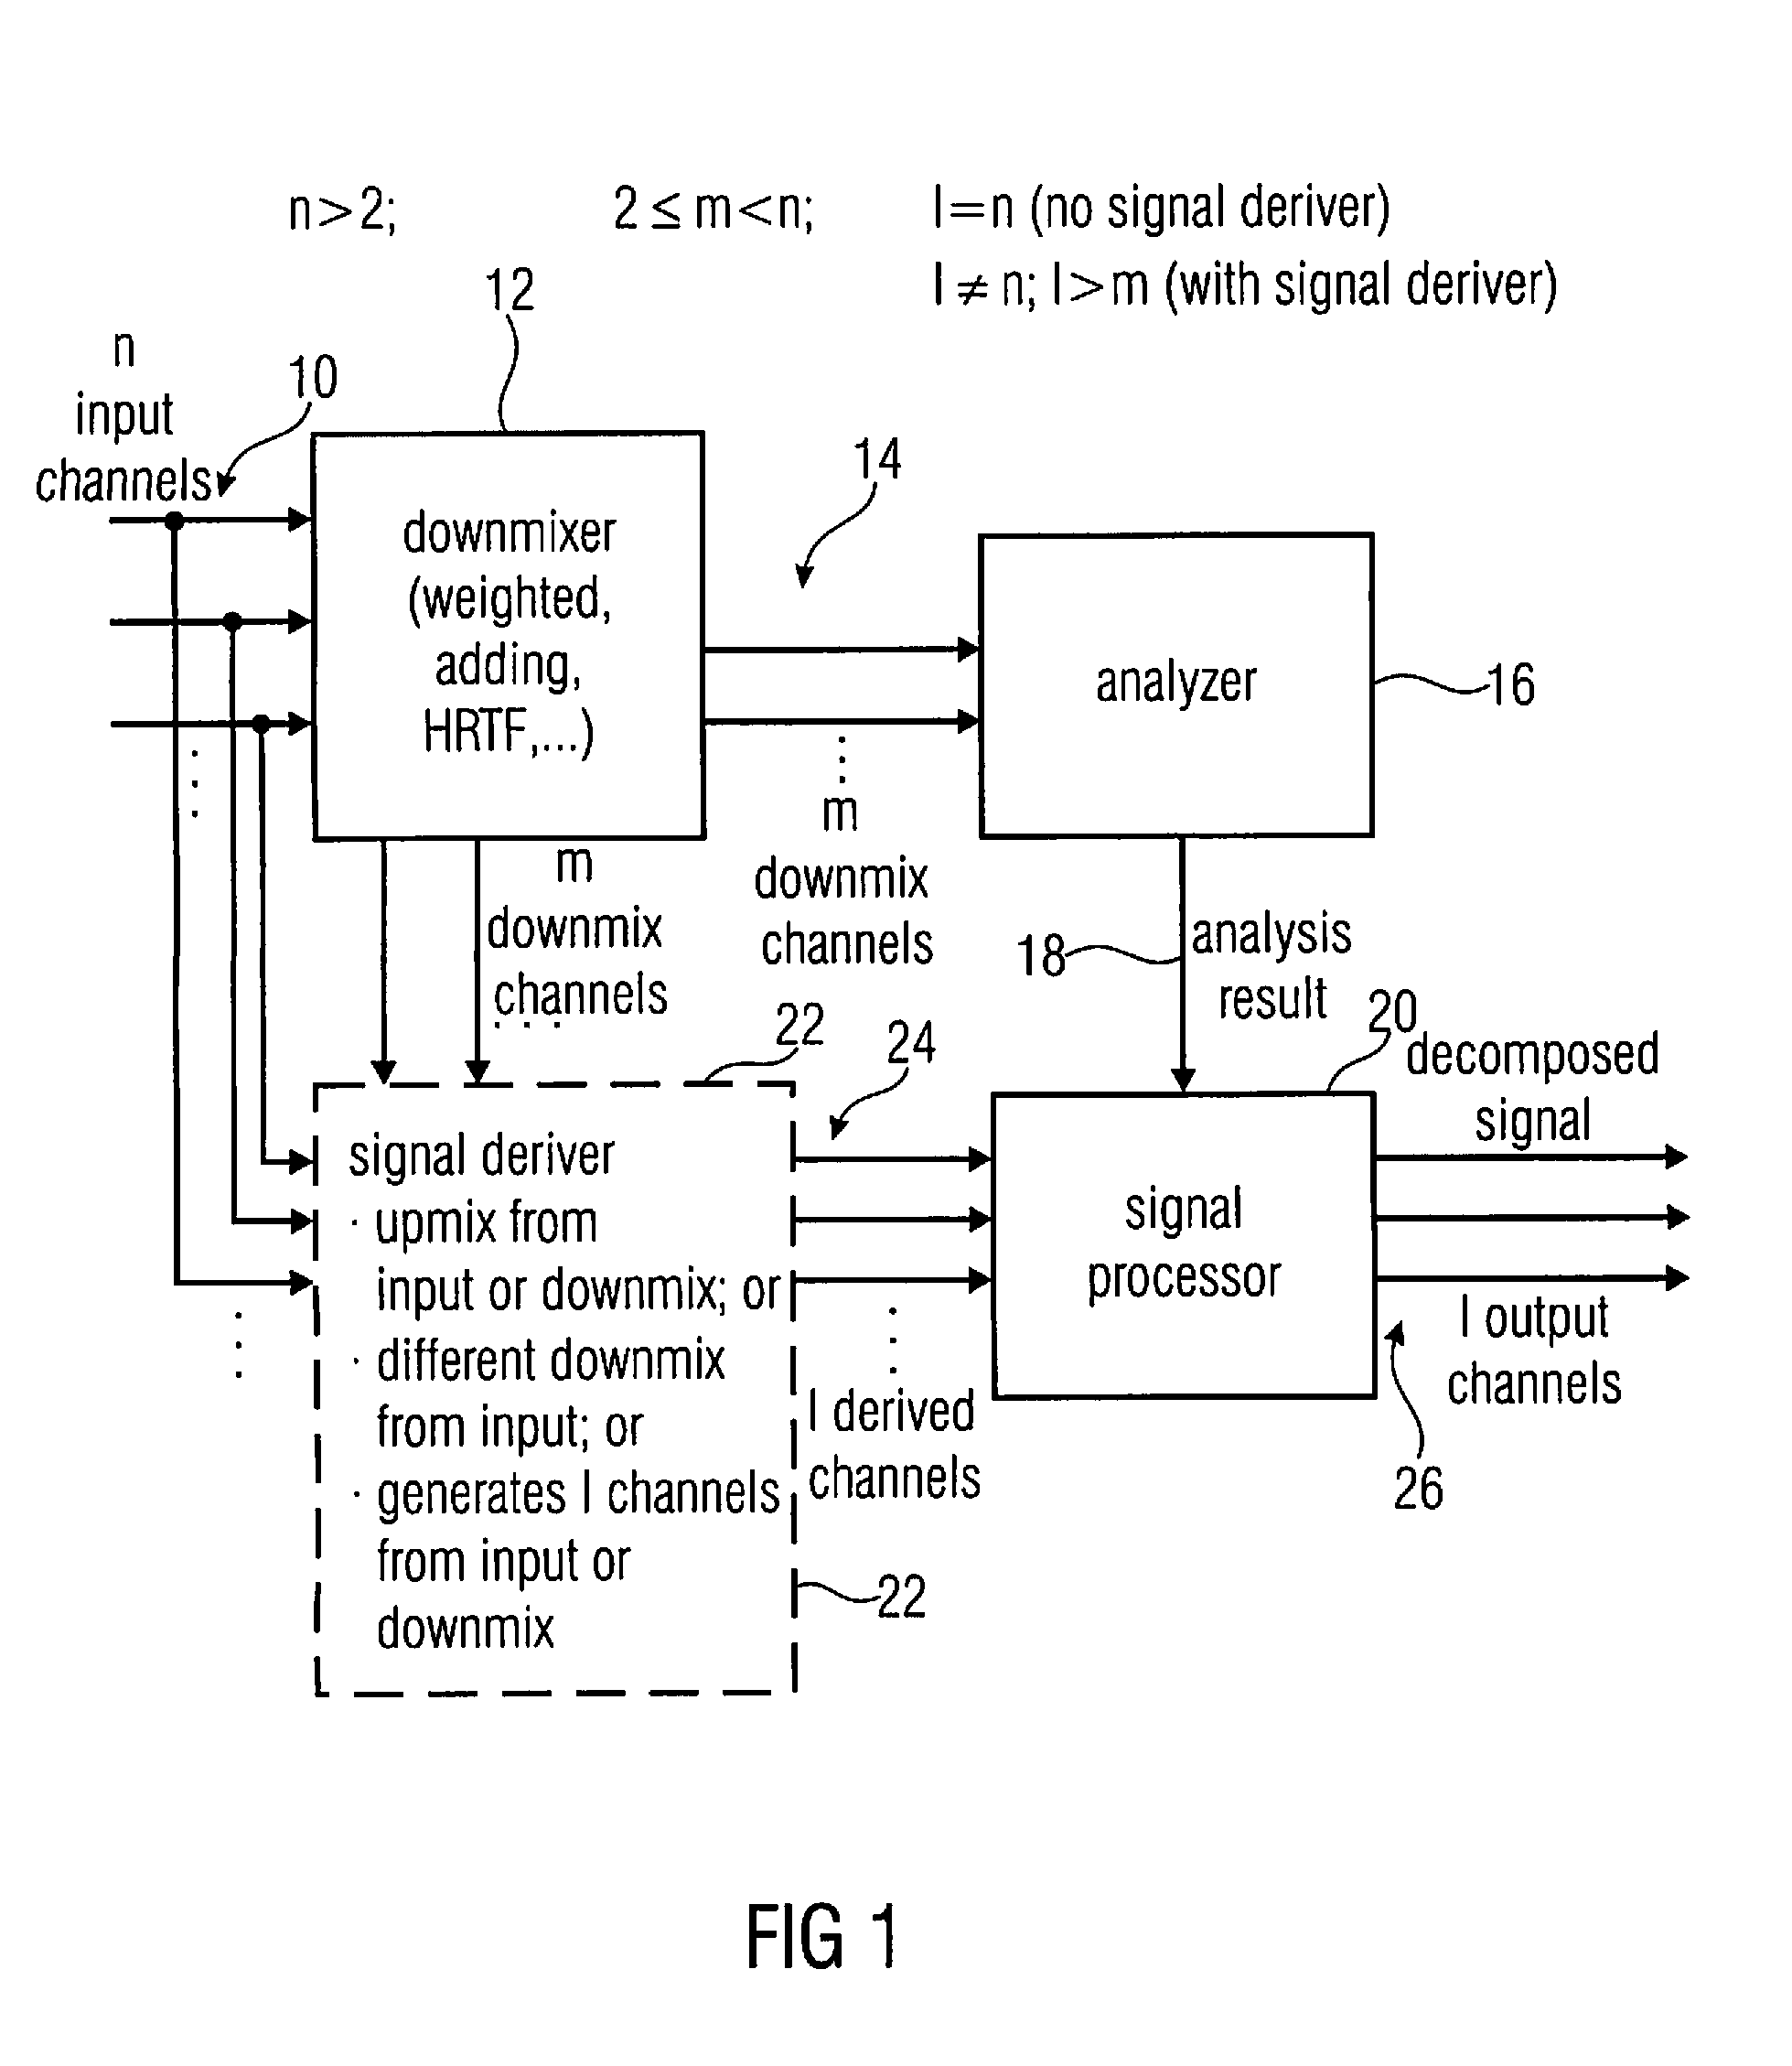 Apparatus and Method for Decomposing an Input Signal Using a Downmixer